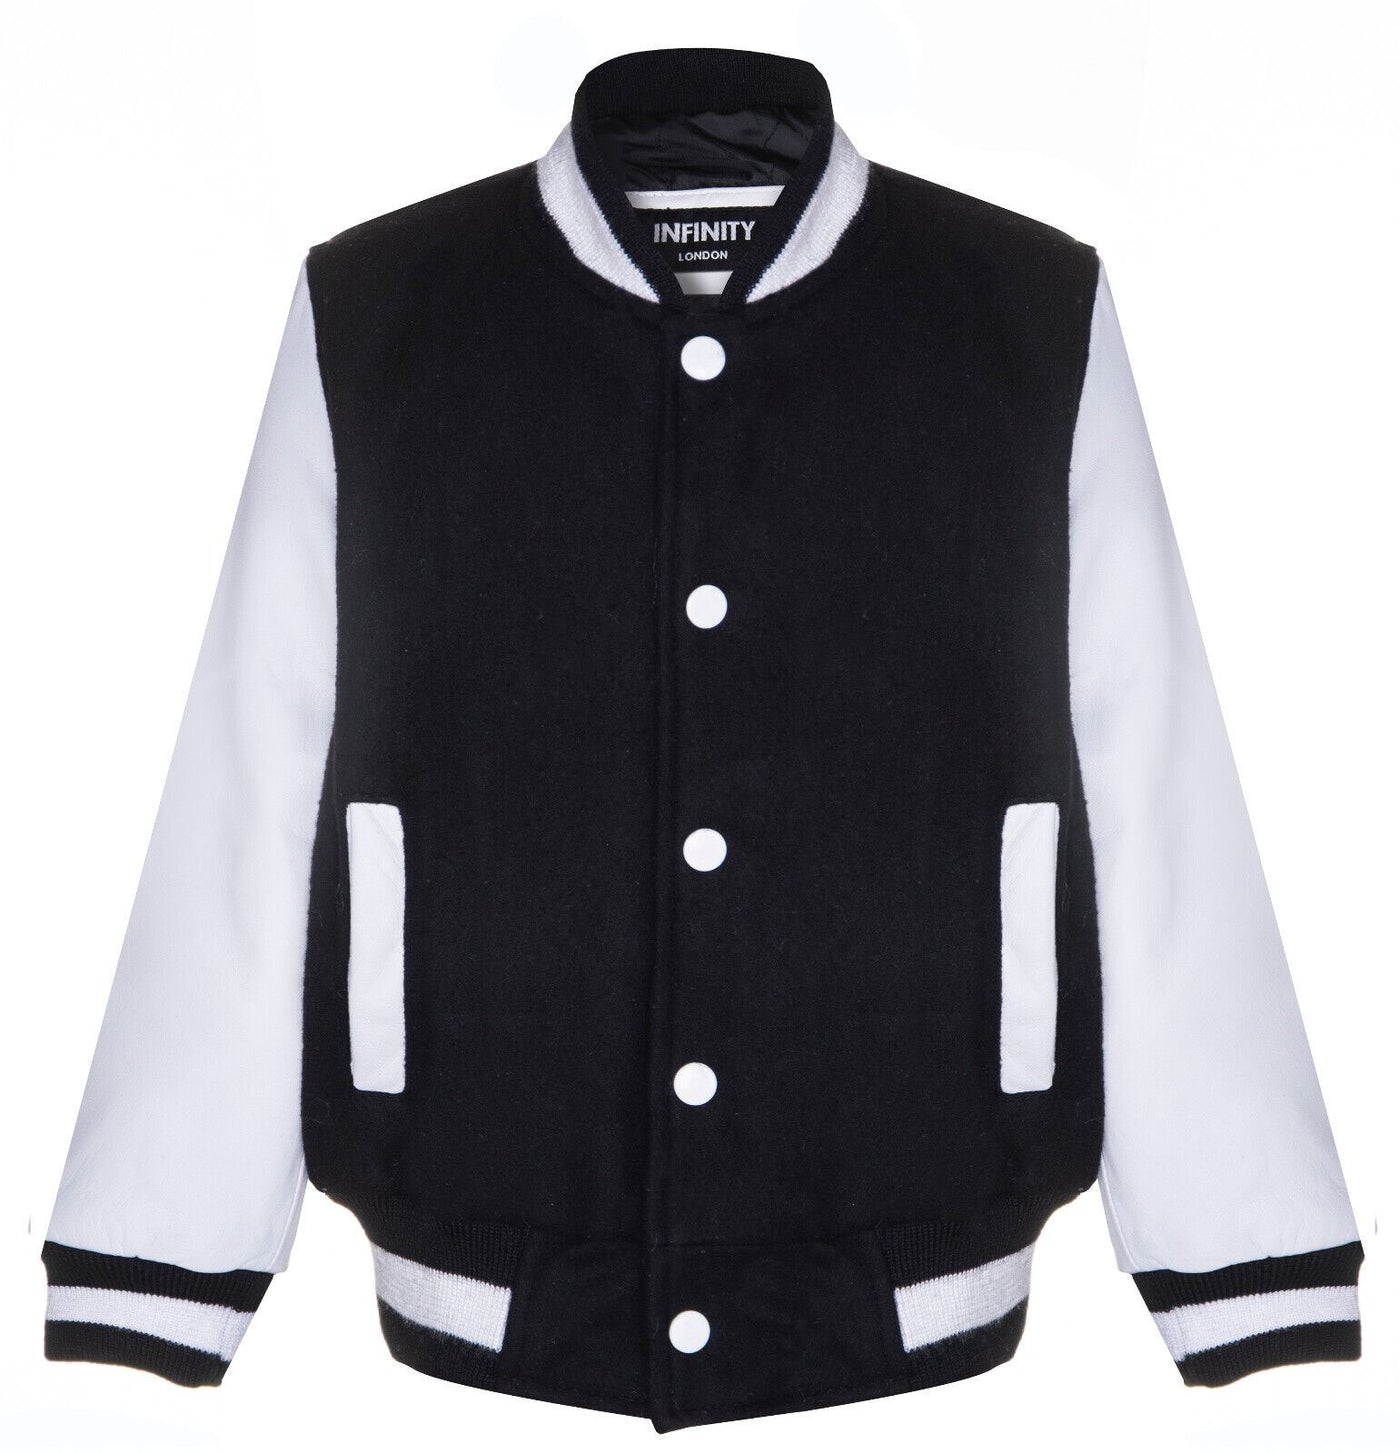 Kids Varsity Black & White Bomber Jacket with Real Leather Sleeves 3-13 yrs